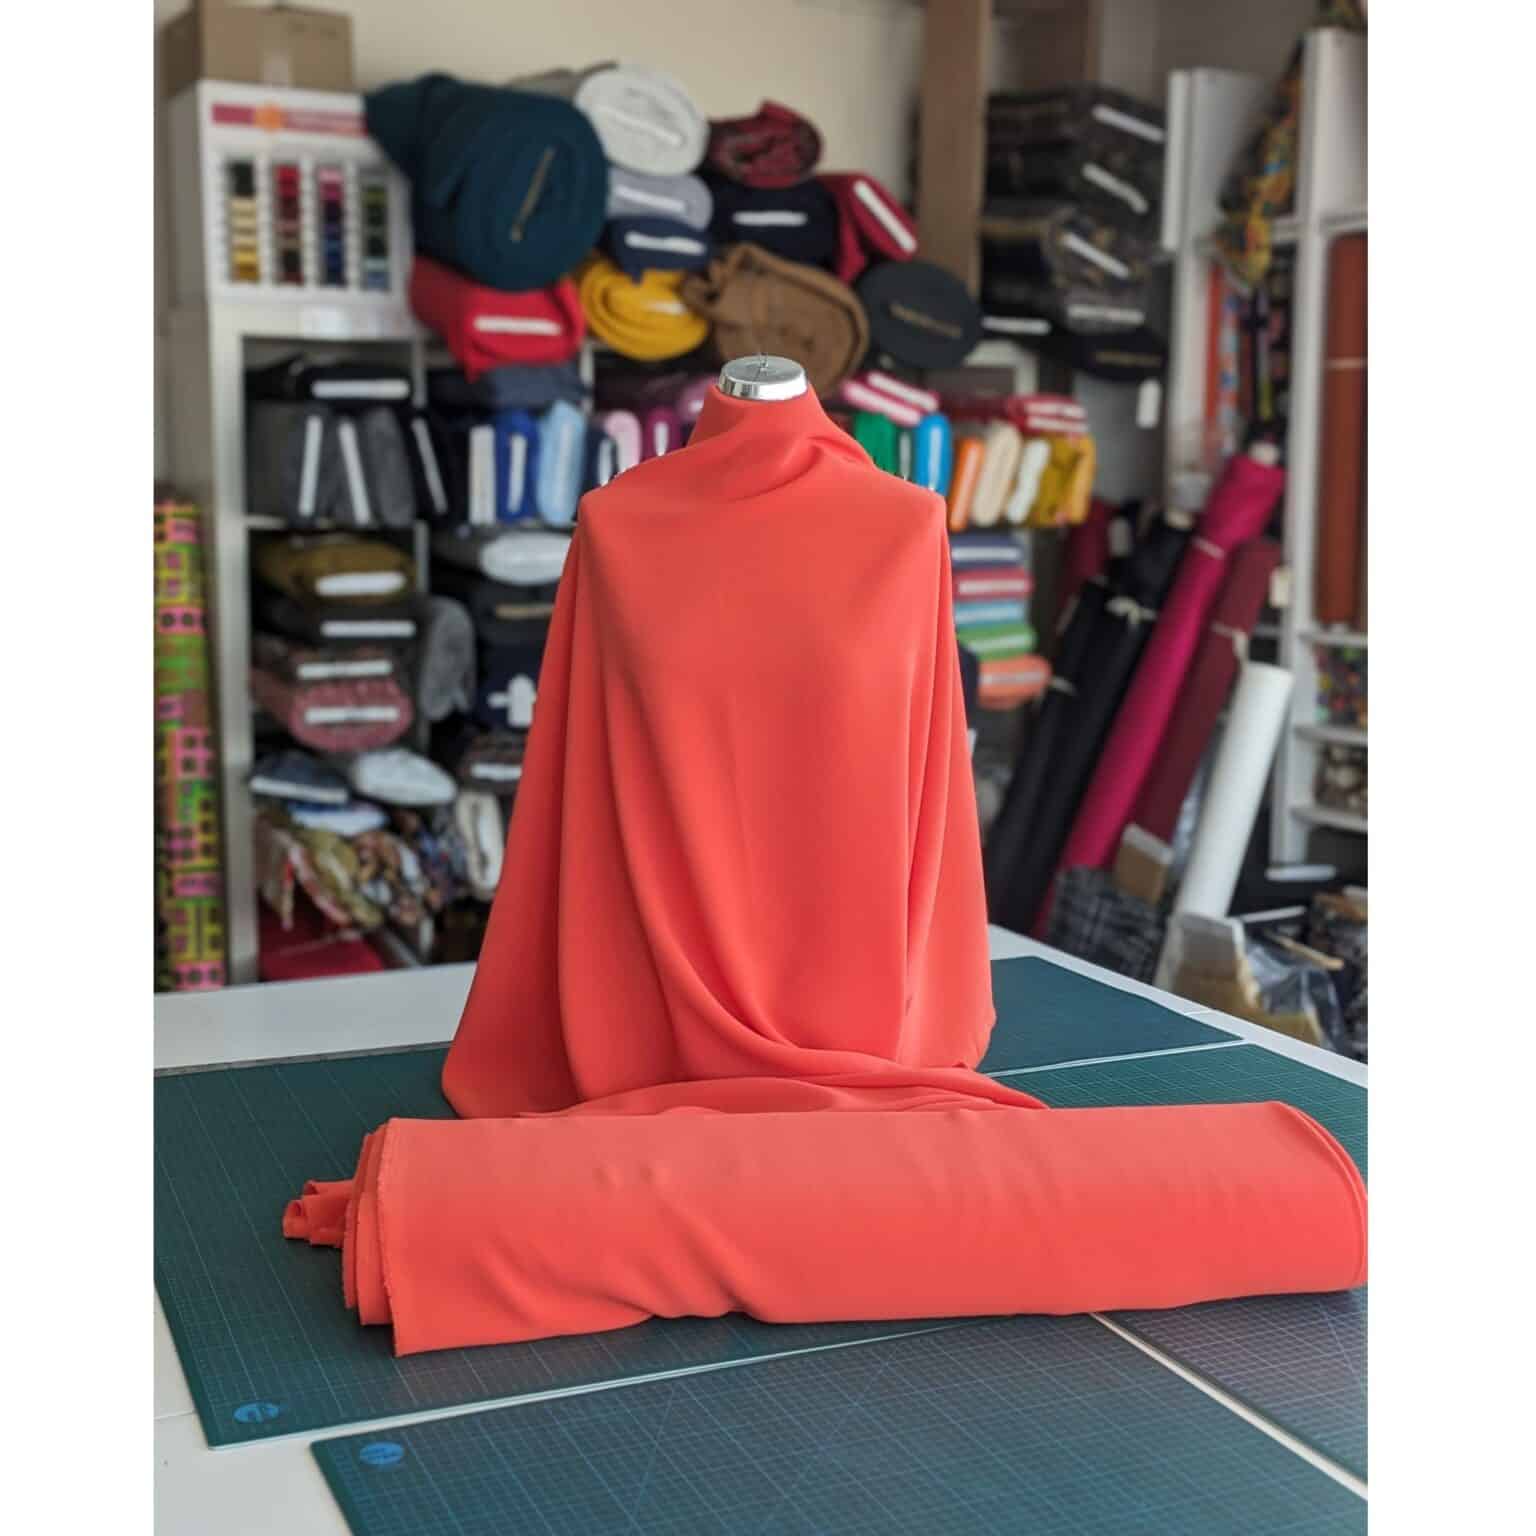 Polyester Triple Crepe Fabric - Orange - 150cm Wide